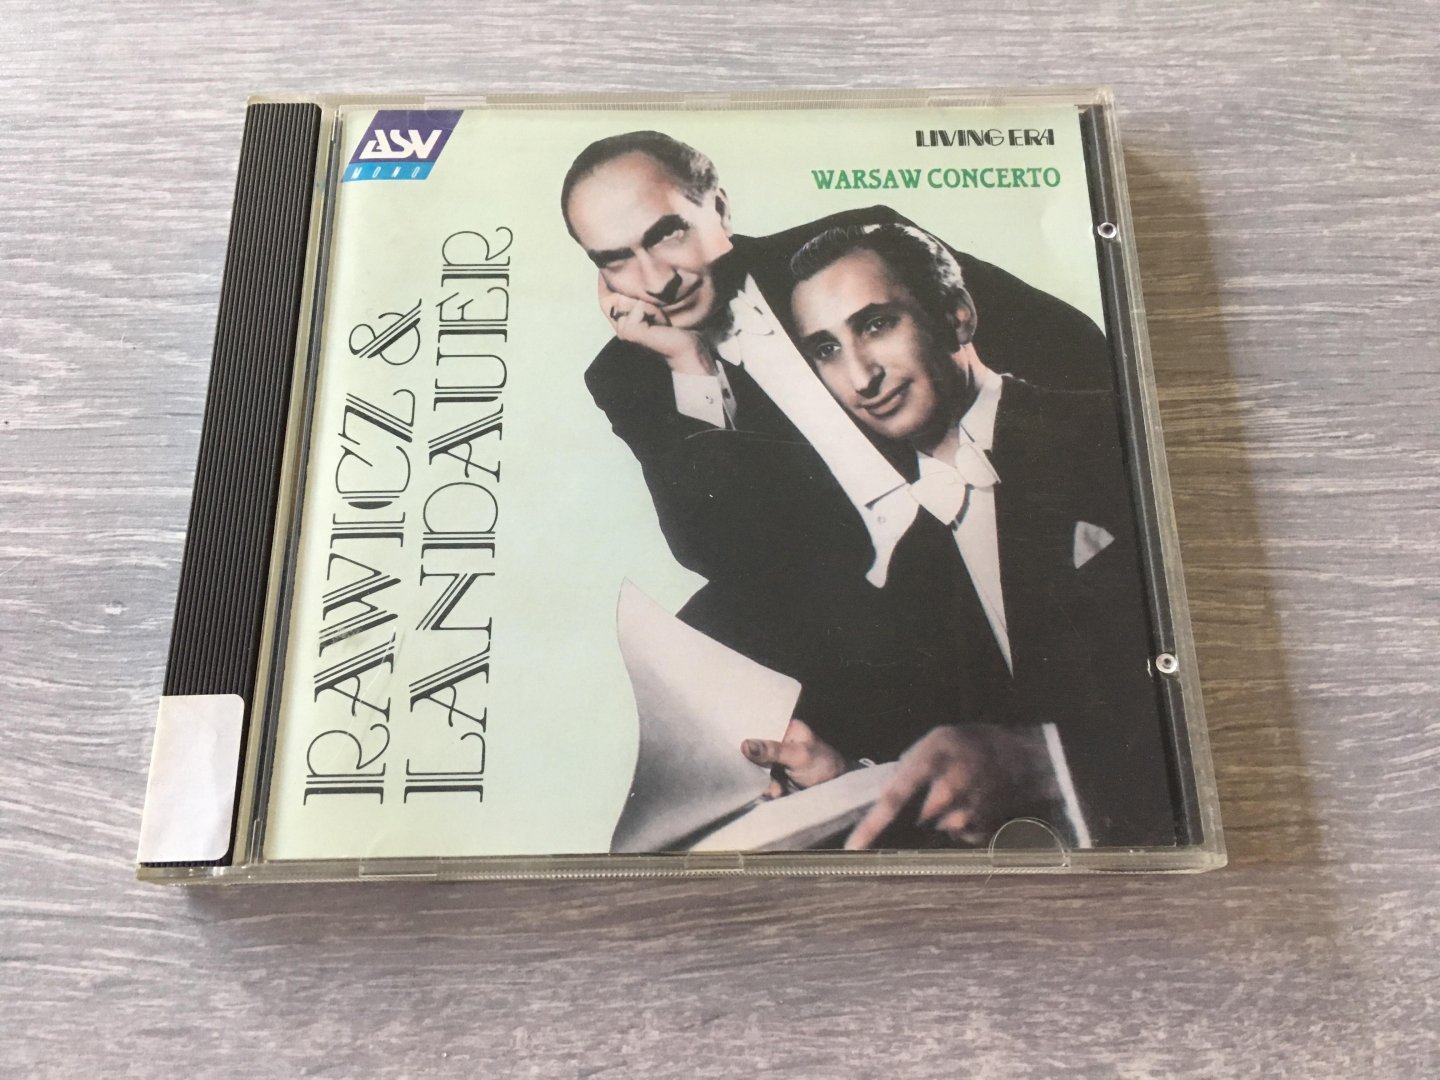 Wawicz & Landauer - CD; Wawicz & Landauer; Warsaw concerto